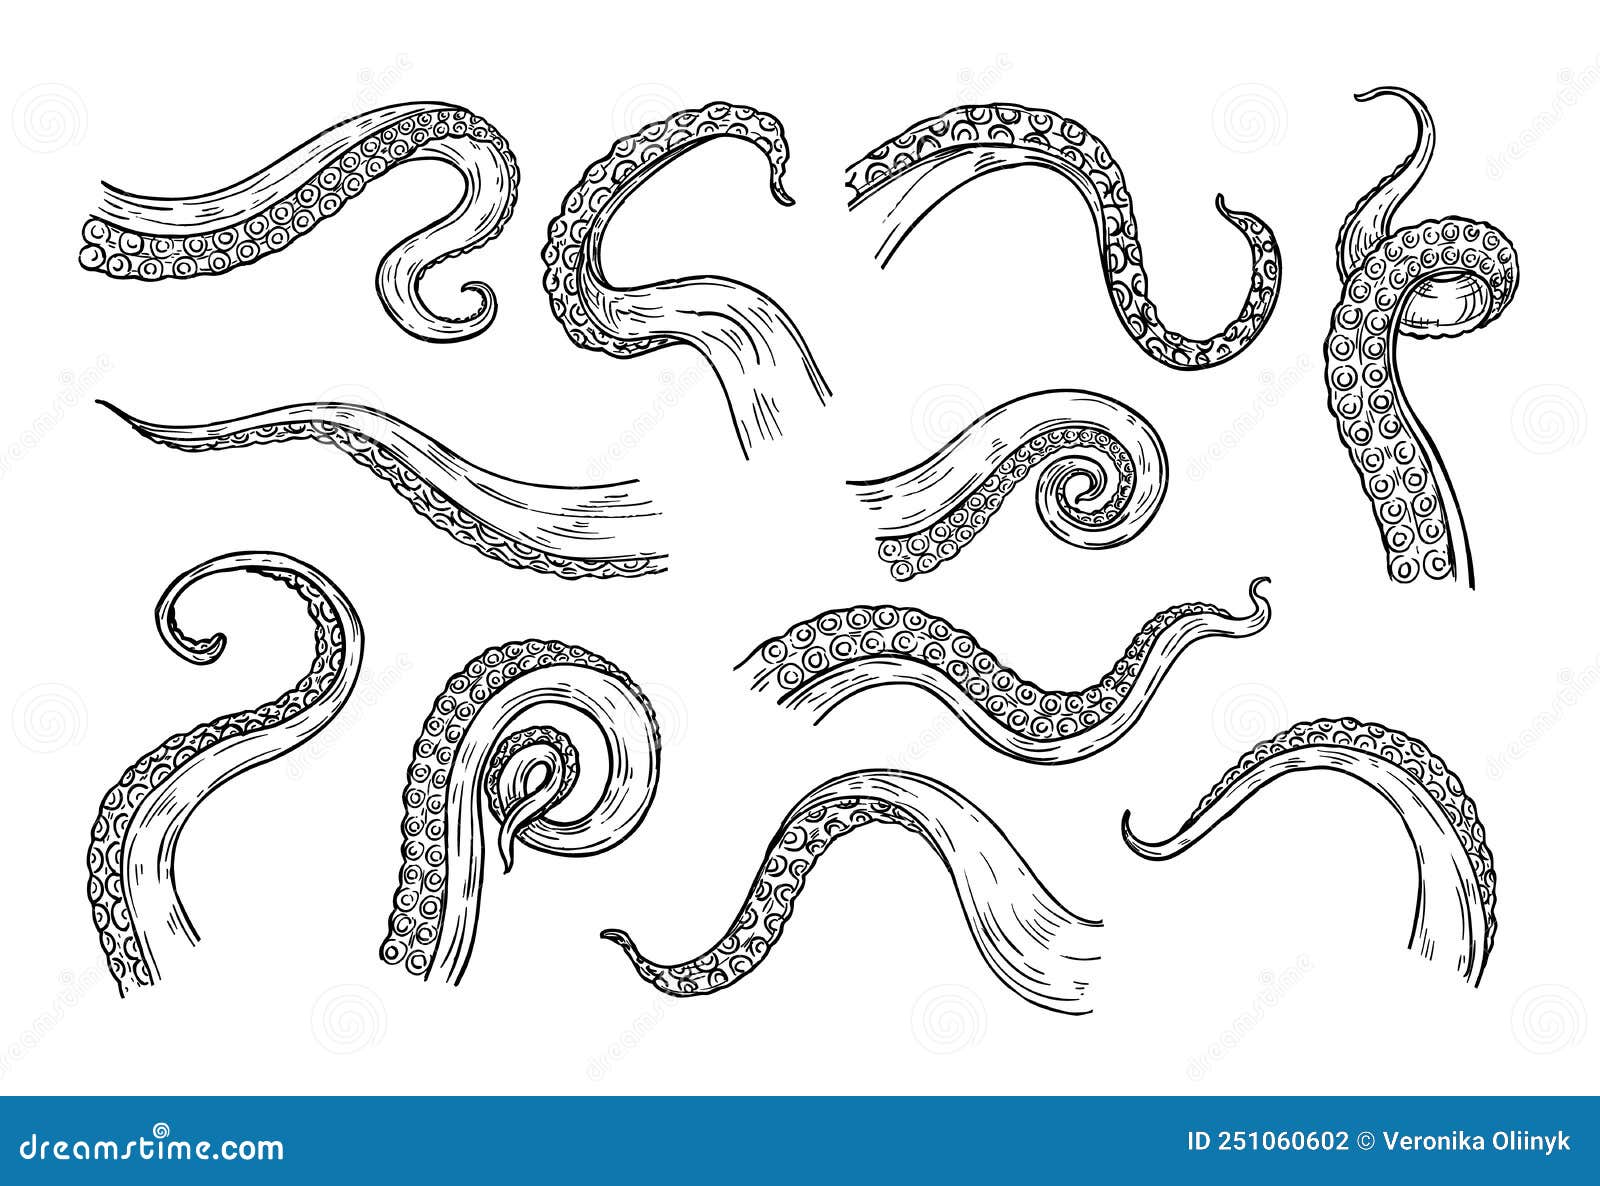 octopus tentacles engraving. hand drawn tentacle of underwater squid animal, sketch kraken or cthulhu arms with sucker